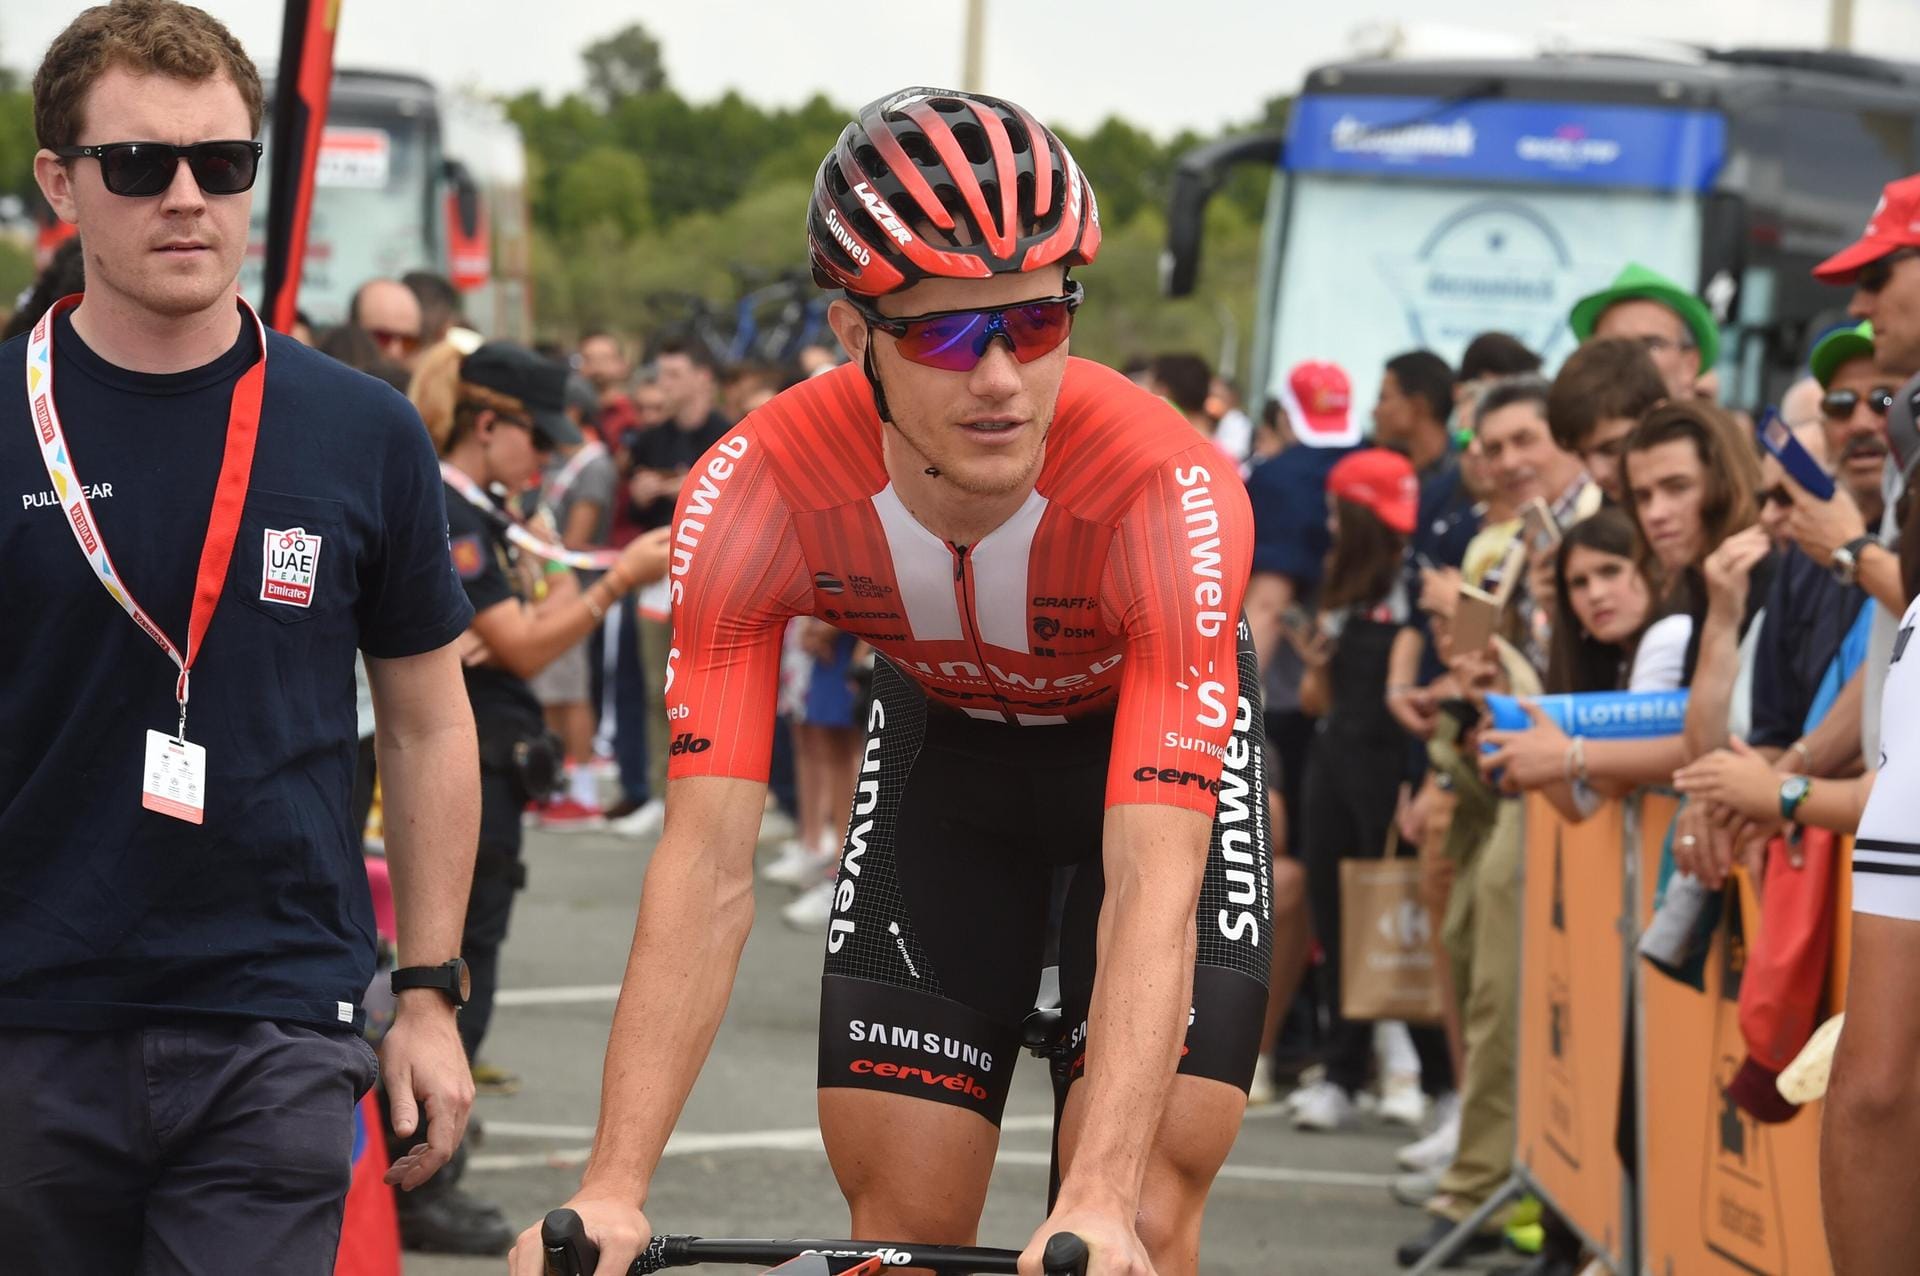 Nikias Arndt (Team Sunweb) - geb. am 18.11.1991 in Buchholz - 4. Tour-Teilnahme - Beste Tour-Platzierung: 67. (2018) - Größte Erfolge: Etappensieger Vuelta (2019), Etappensieger Giro d'Italia (2016) - Profisiege: 6